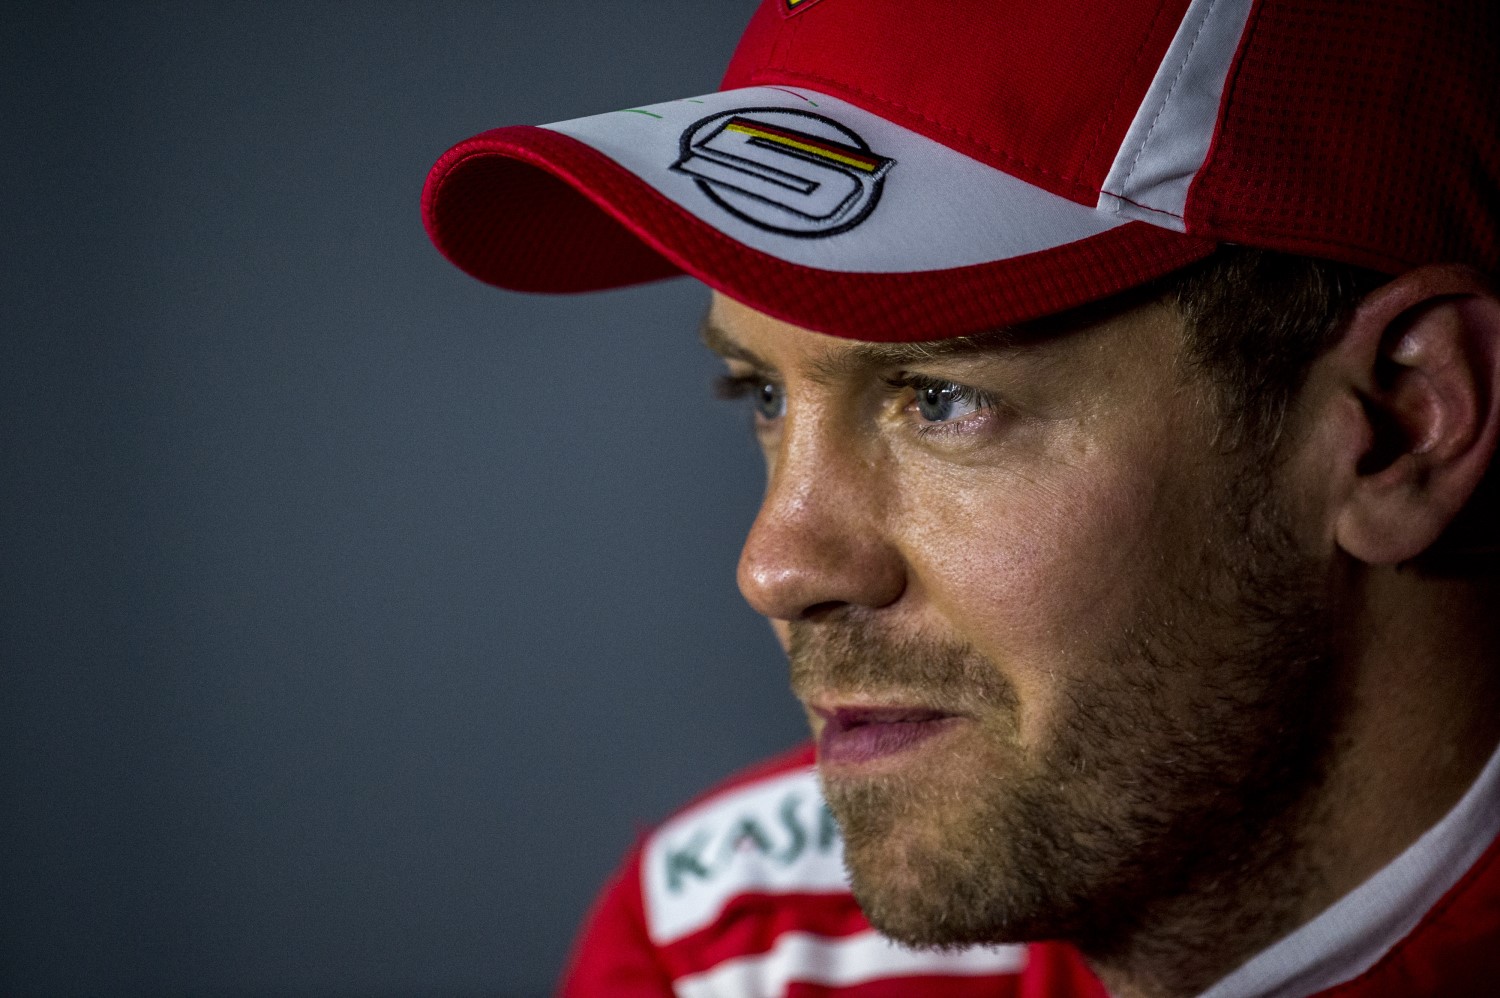 Vettel hammered by the Italian Press